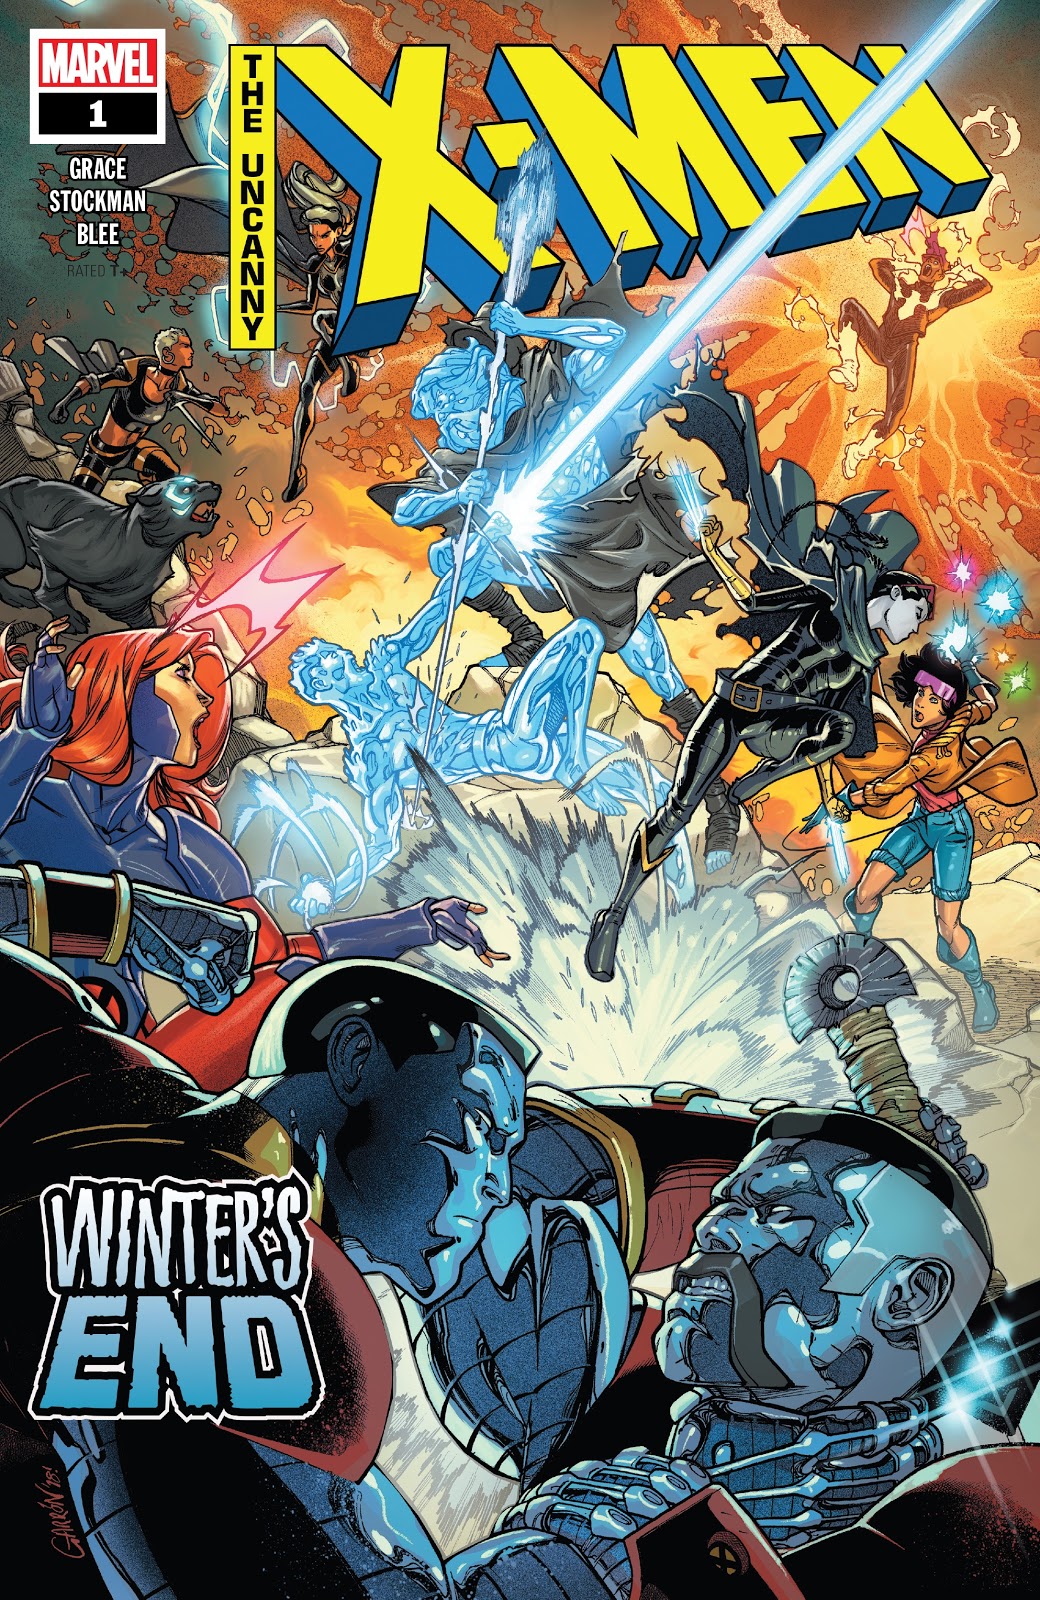 Uncanny X-Men Winter's End Issue 1 Review